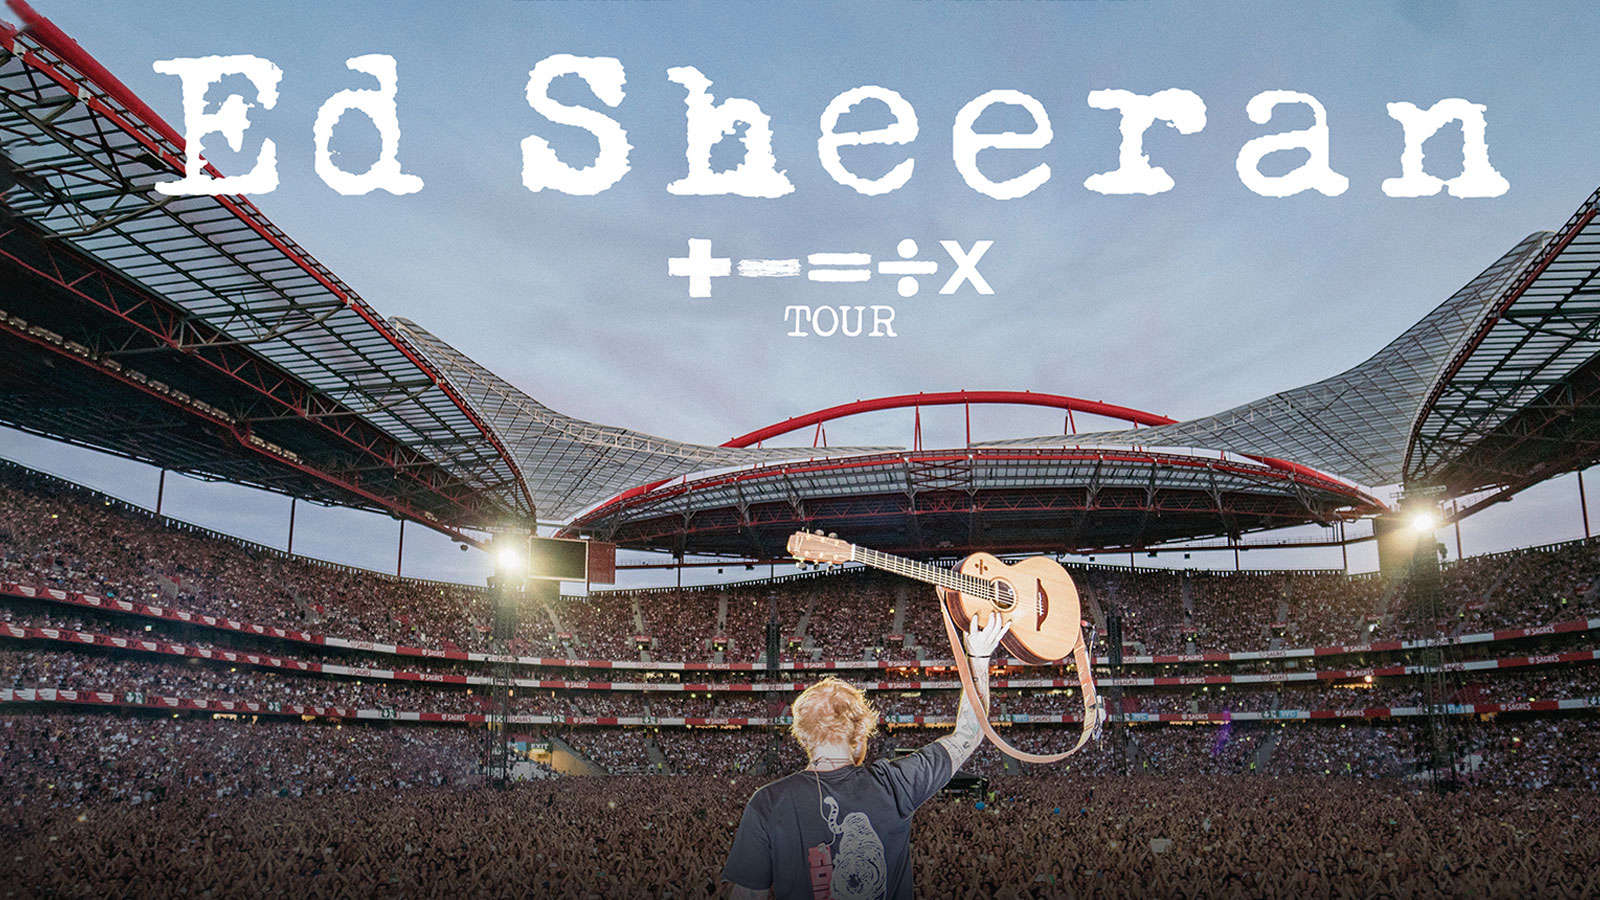 Win Tickets to Ed Sheeran Mathematics Tour!'s FM104